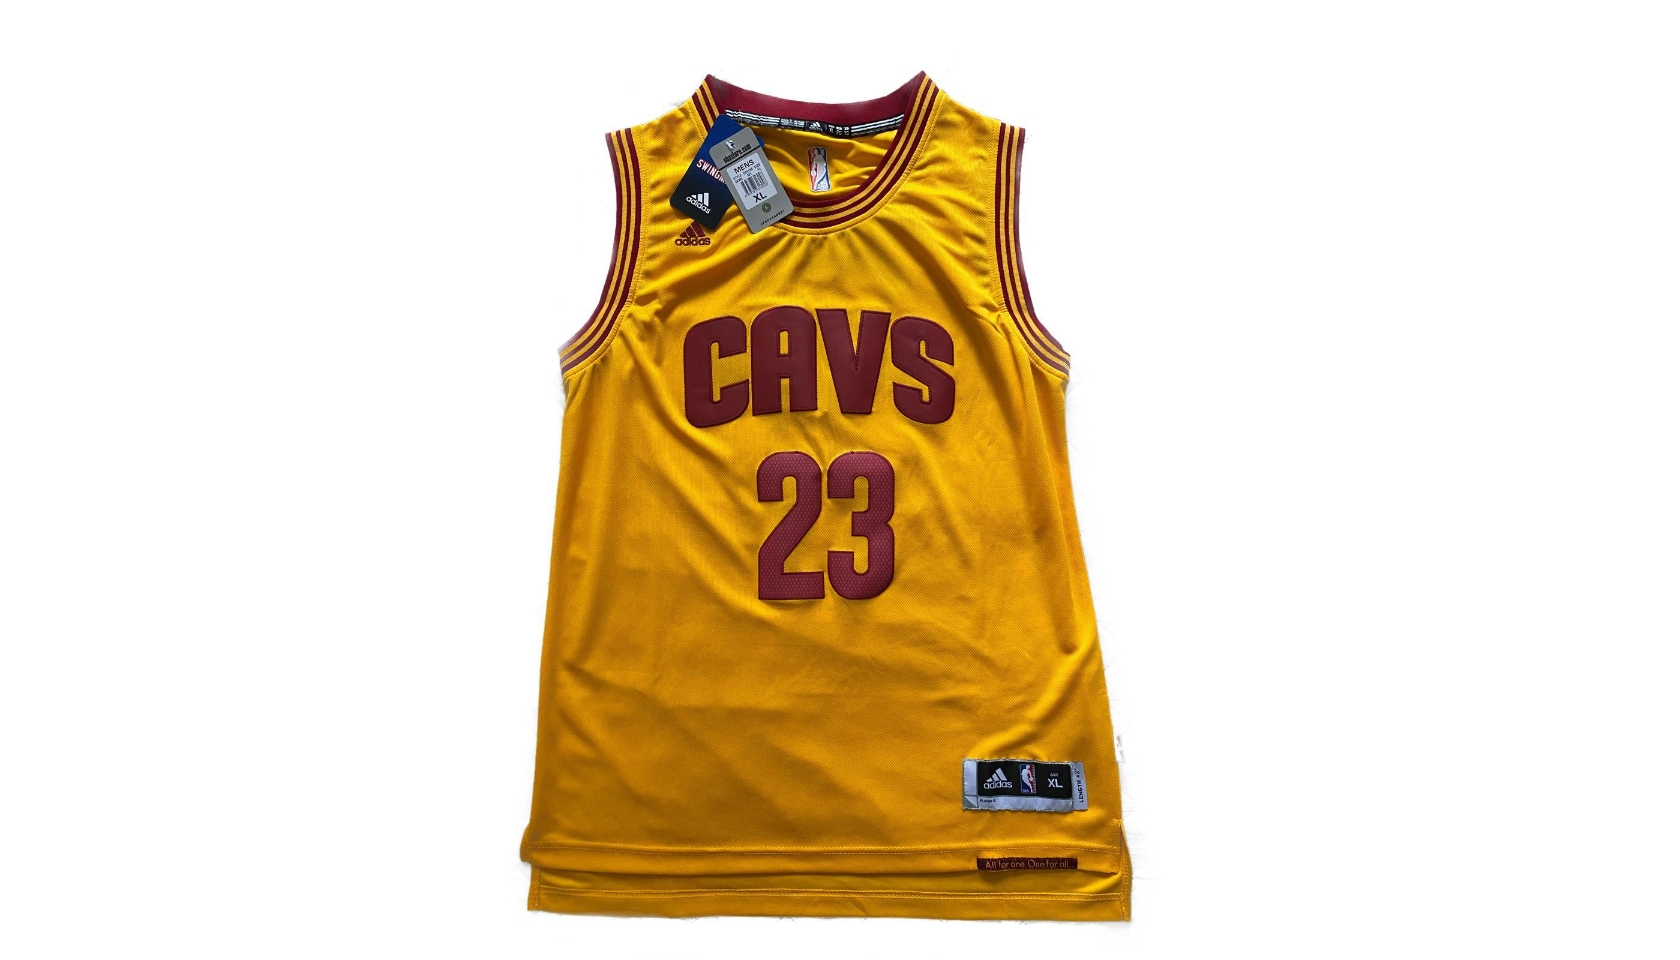 Cavs, LeBron Announced As Top Selling NBA Merchandise – SportsLogos.Net News